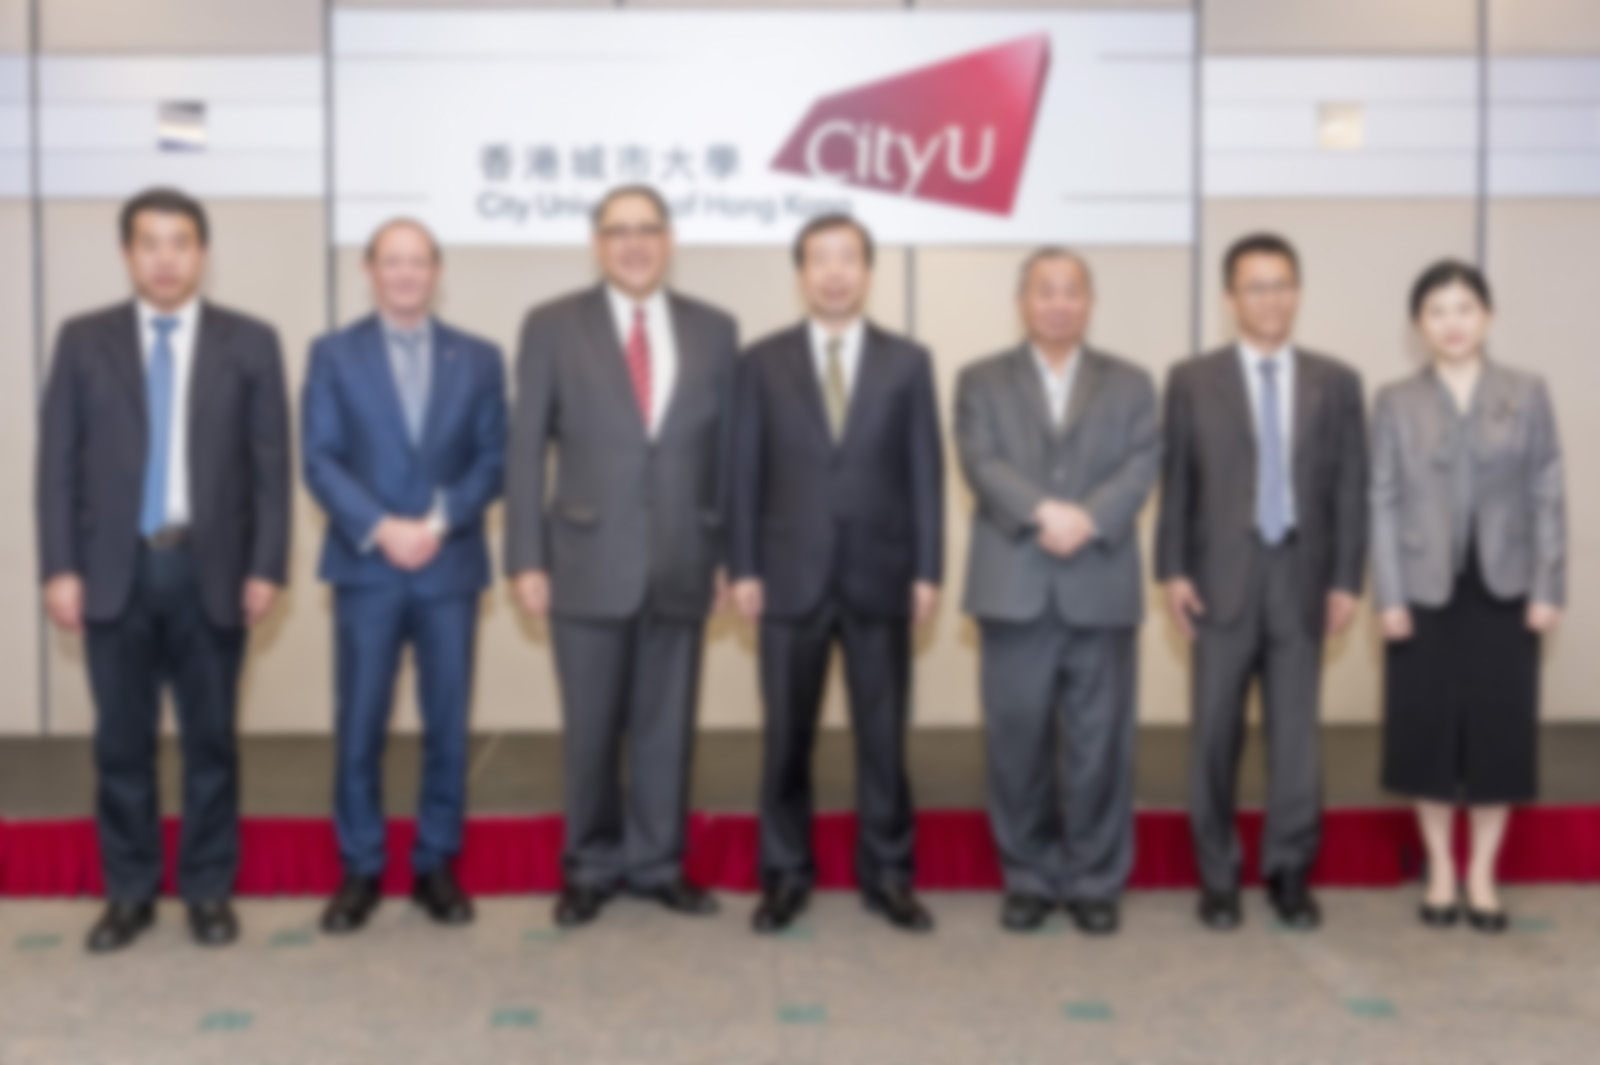 Senior officials from Dongguan visit CityU